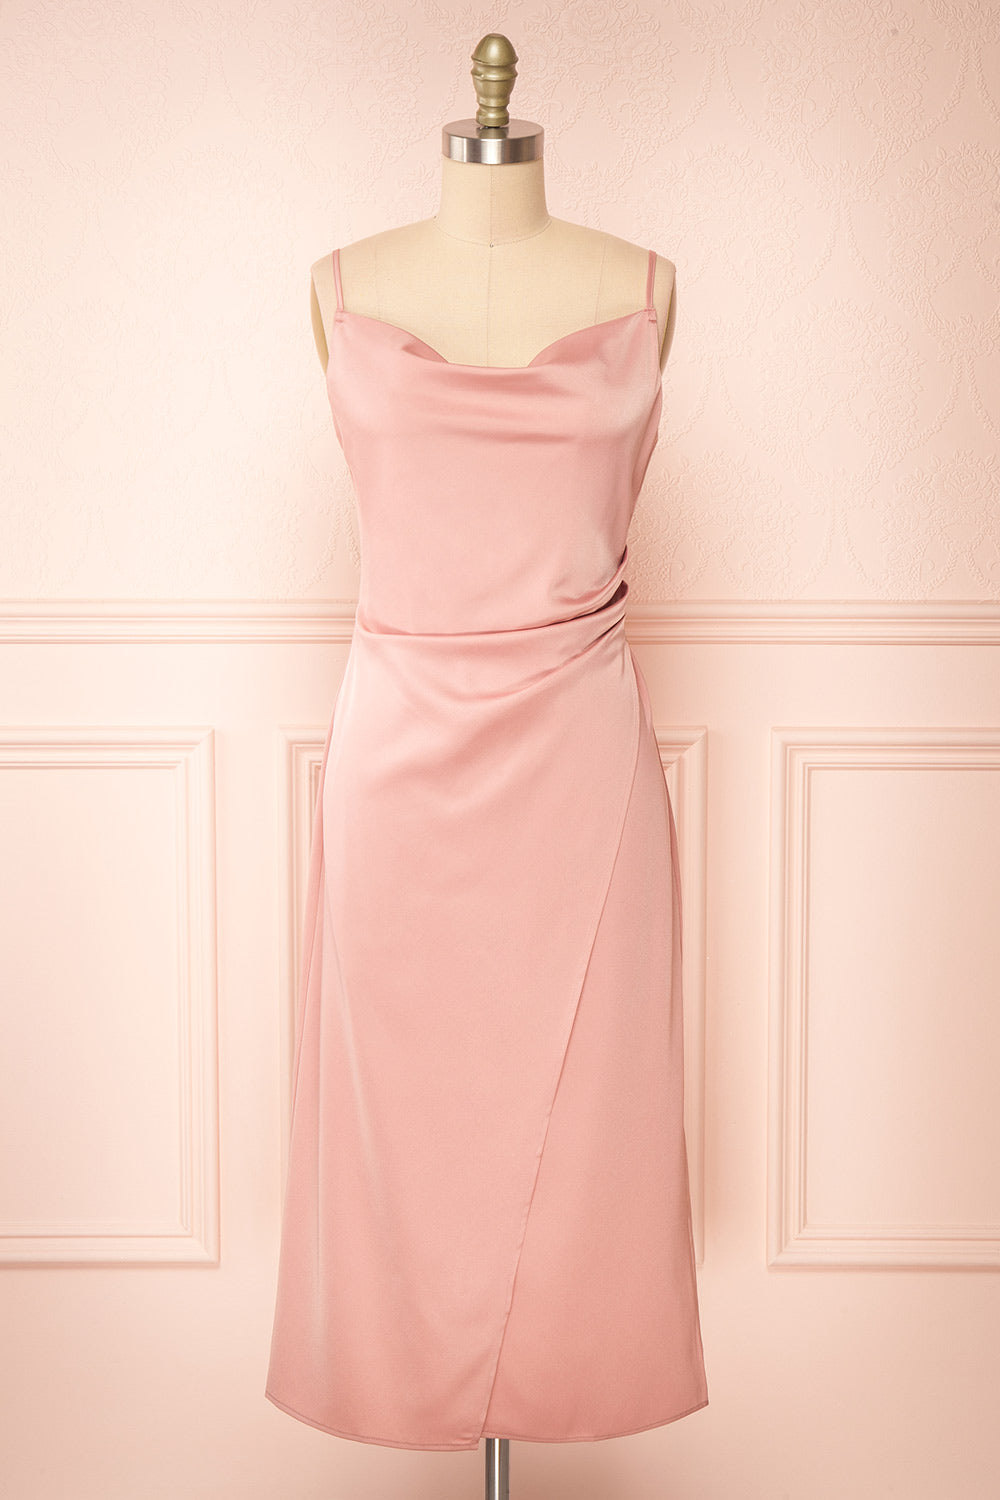 Chloe Pink Cowl Neck Satin Midi Slip Dress | Boutique 1861 front view 